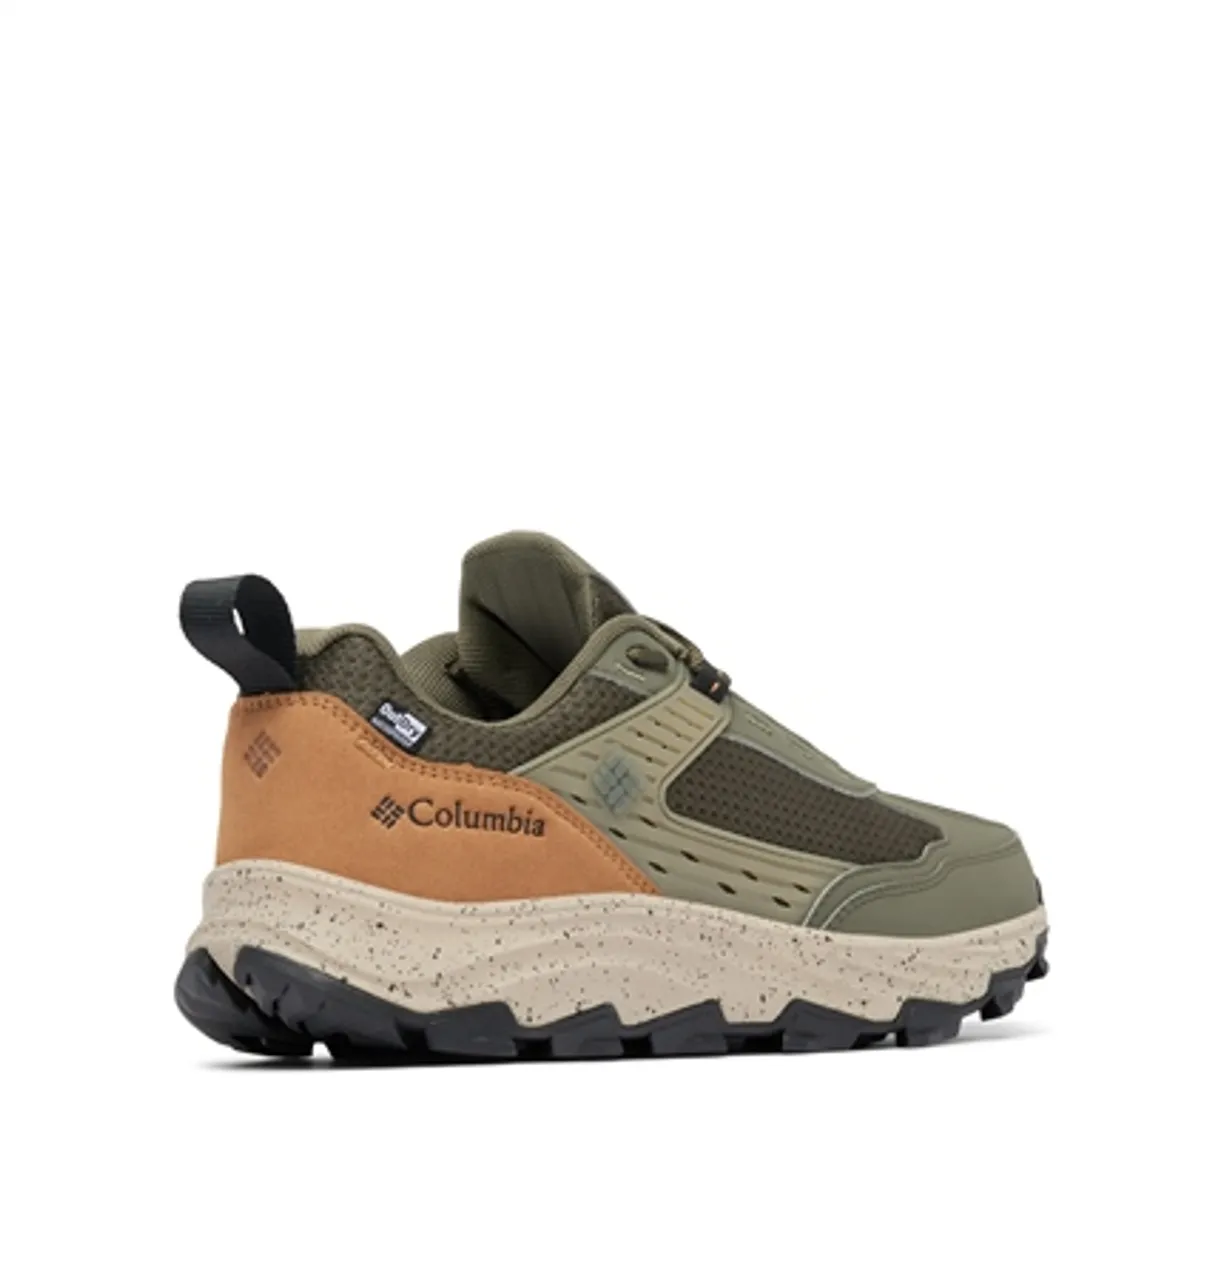 Columbia Hatana Max Outdry Shoes - Alpine Tundra & Elk - UK 8 (EU 42)